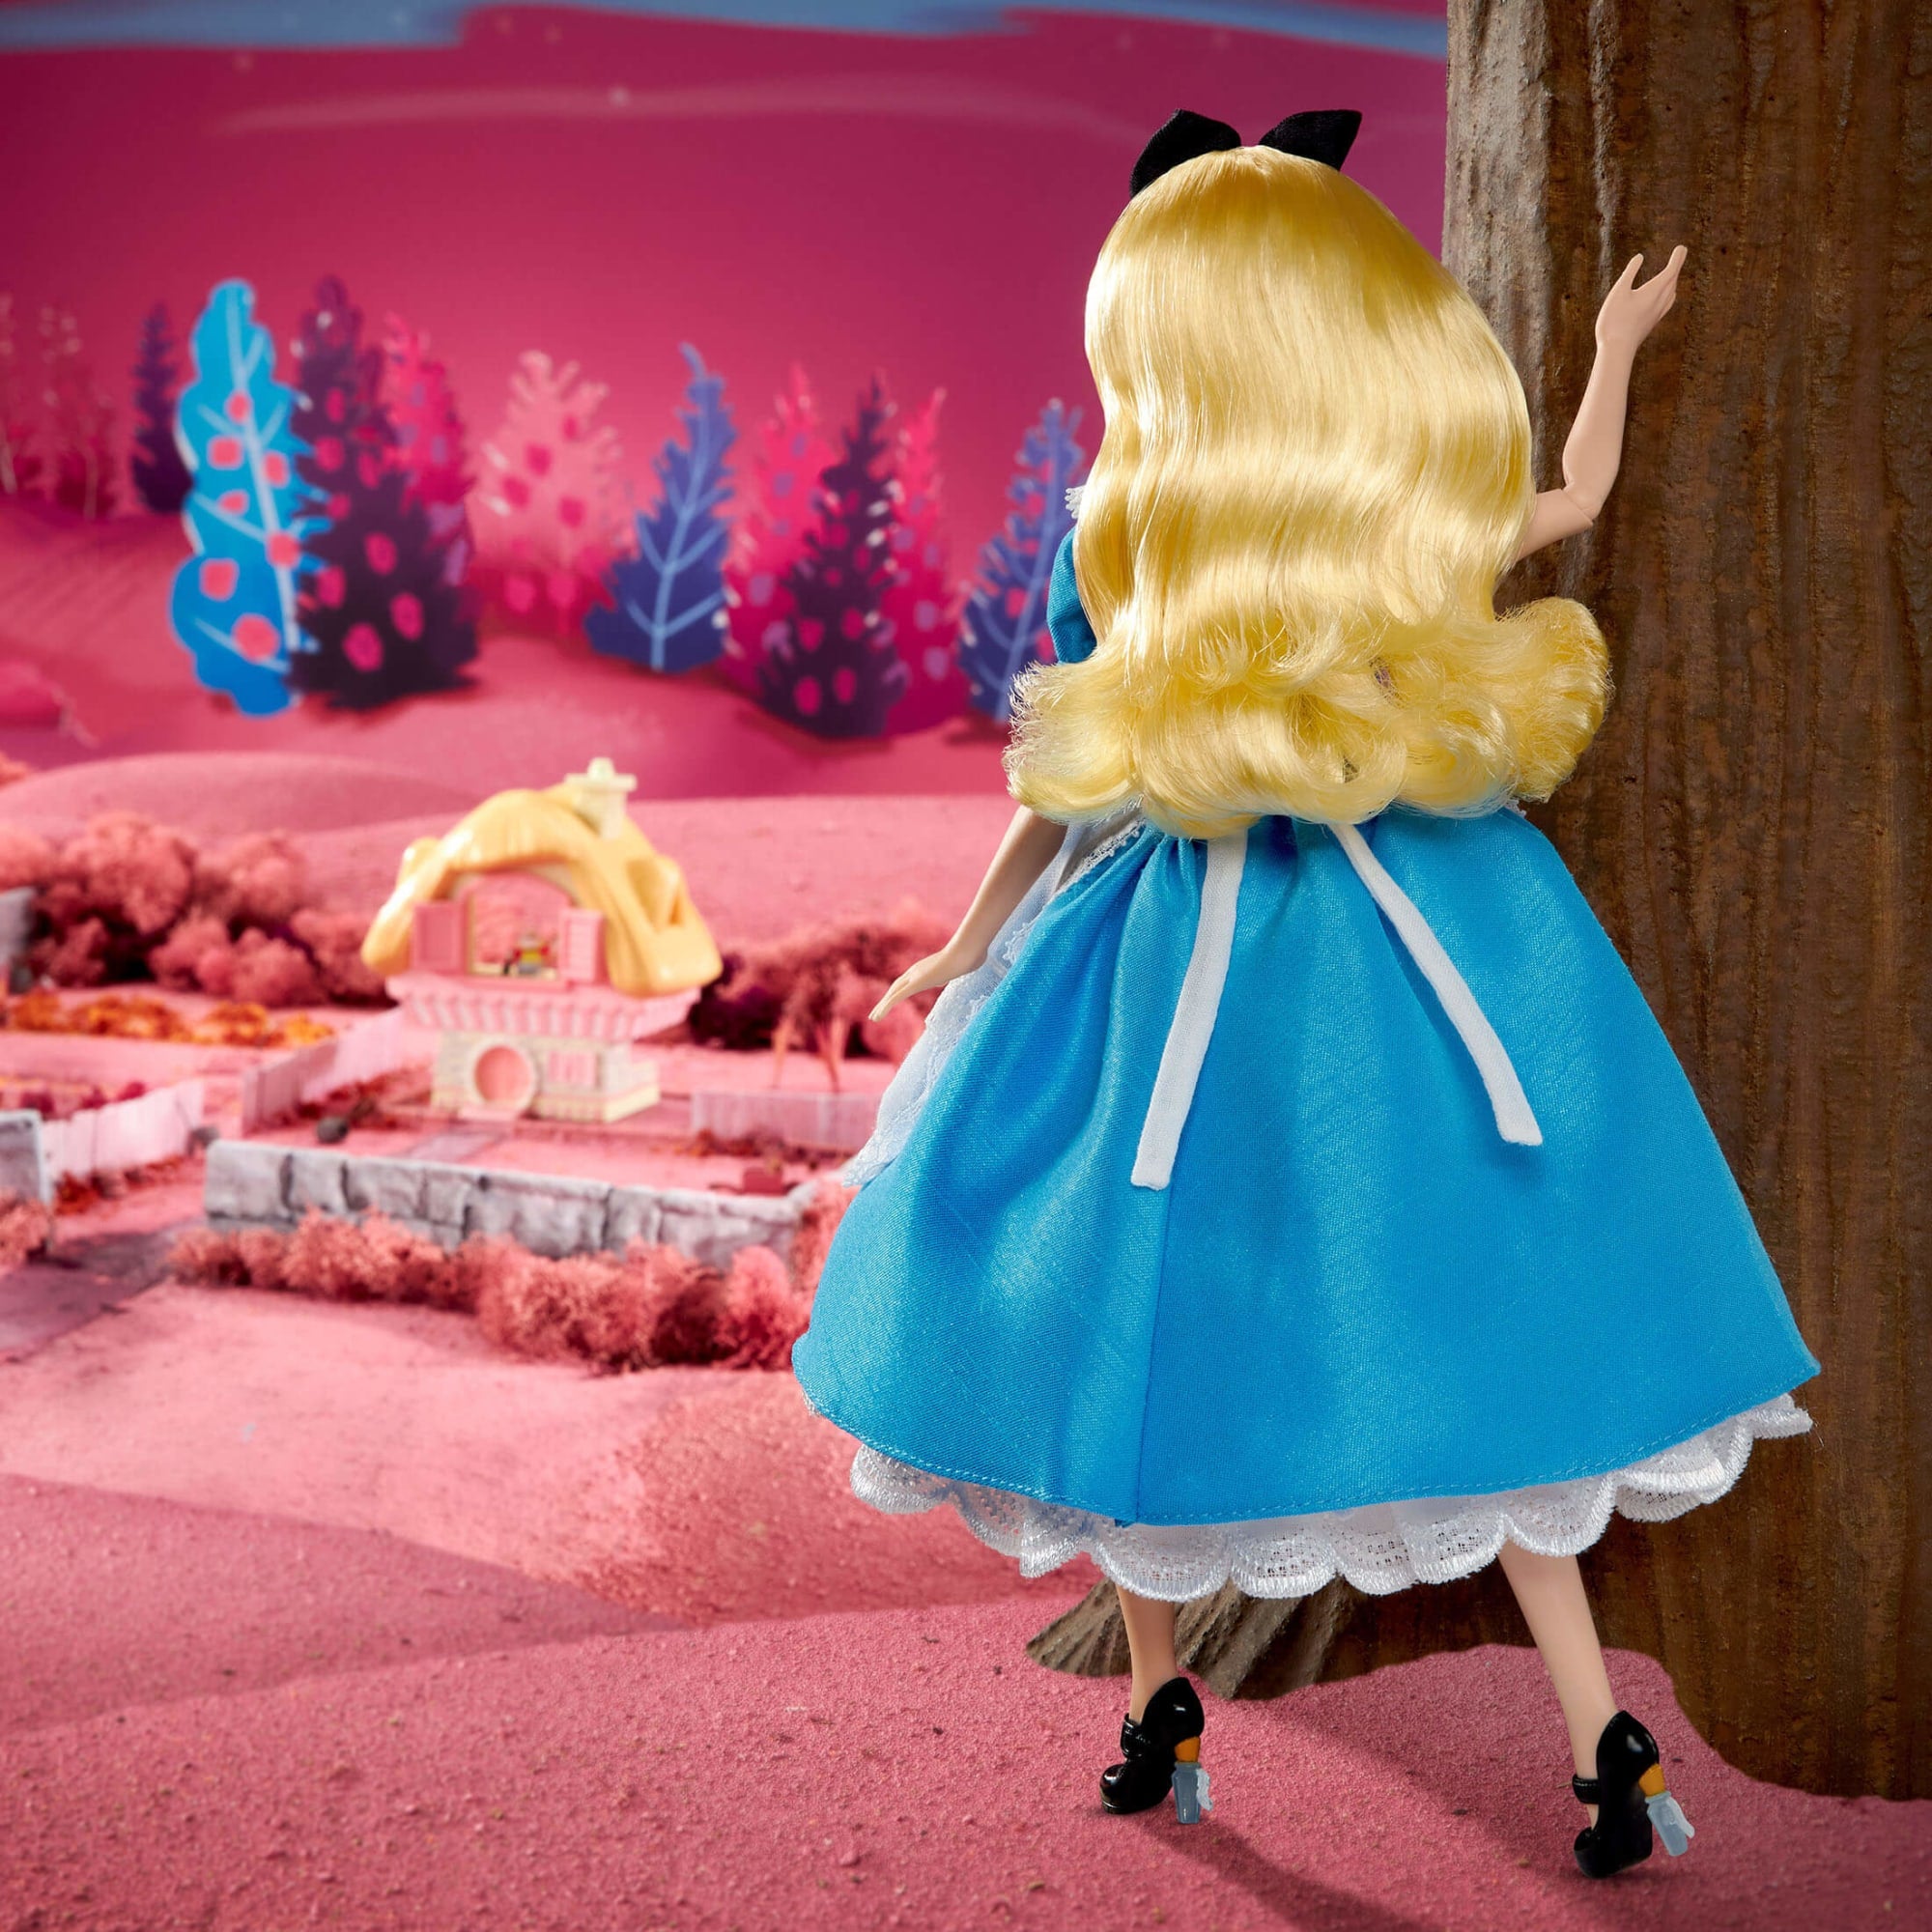 Mattel Disney Classic Alice in Wonderland Barbie doll.